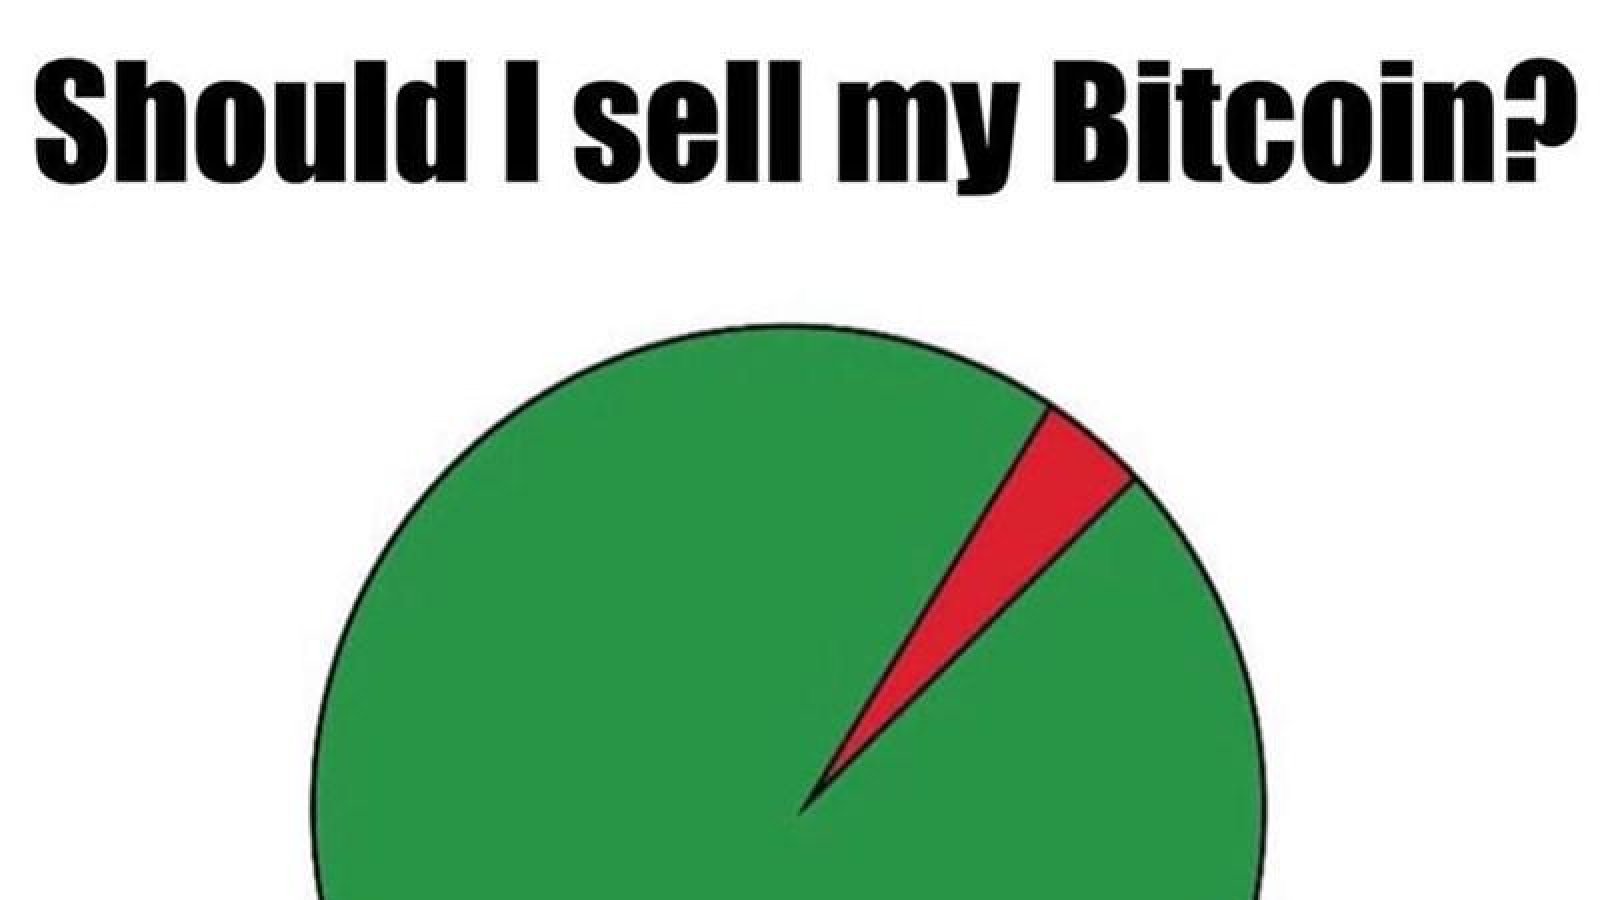 Should I sell mu bitcoin?